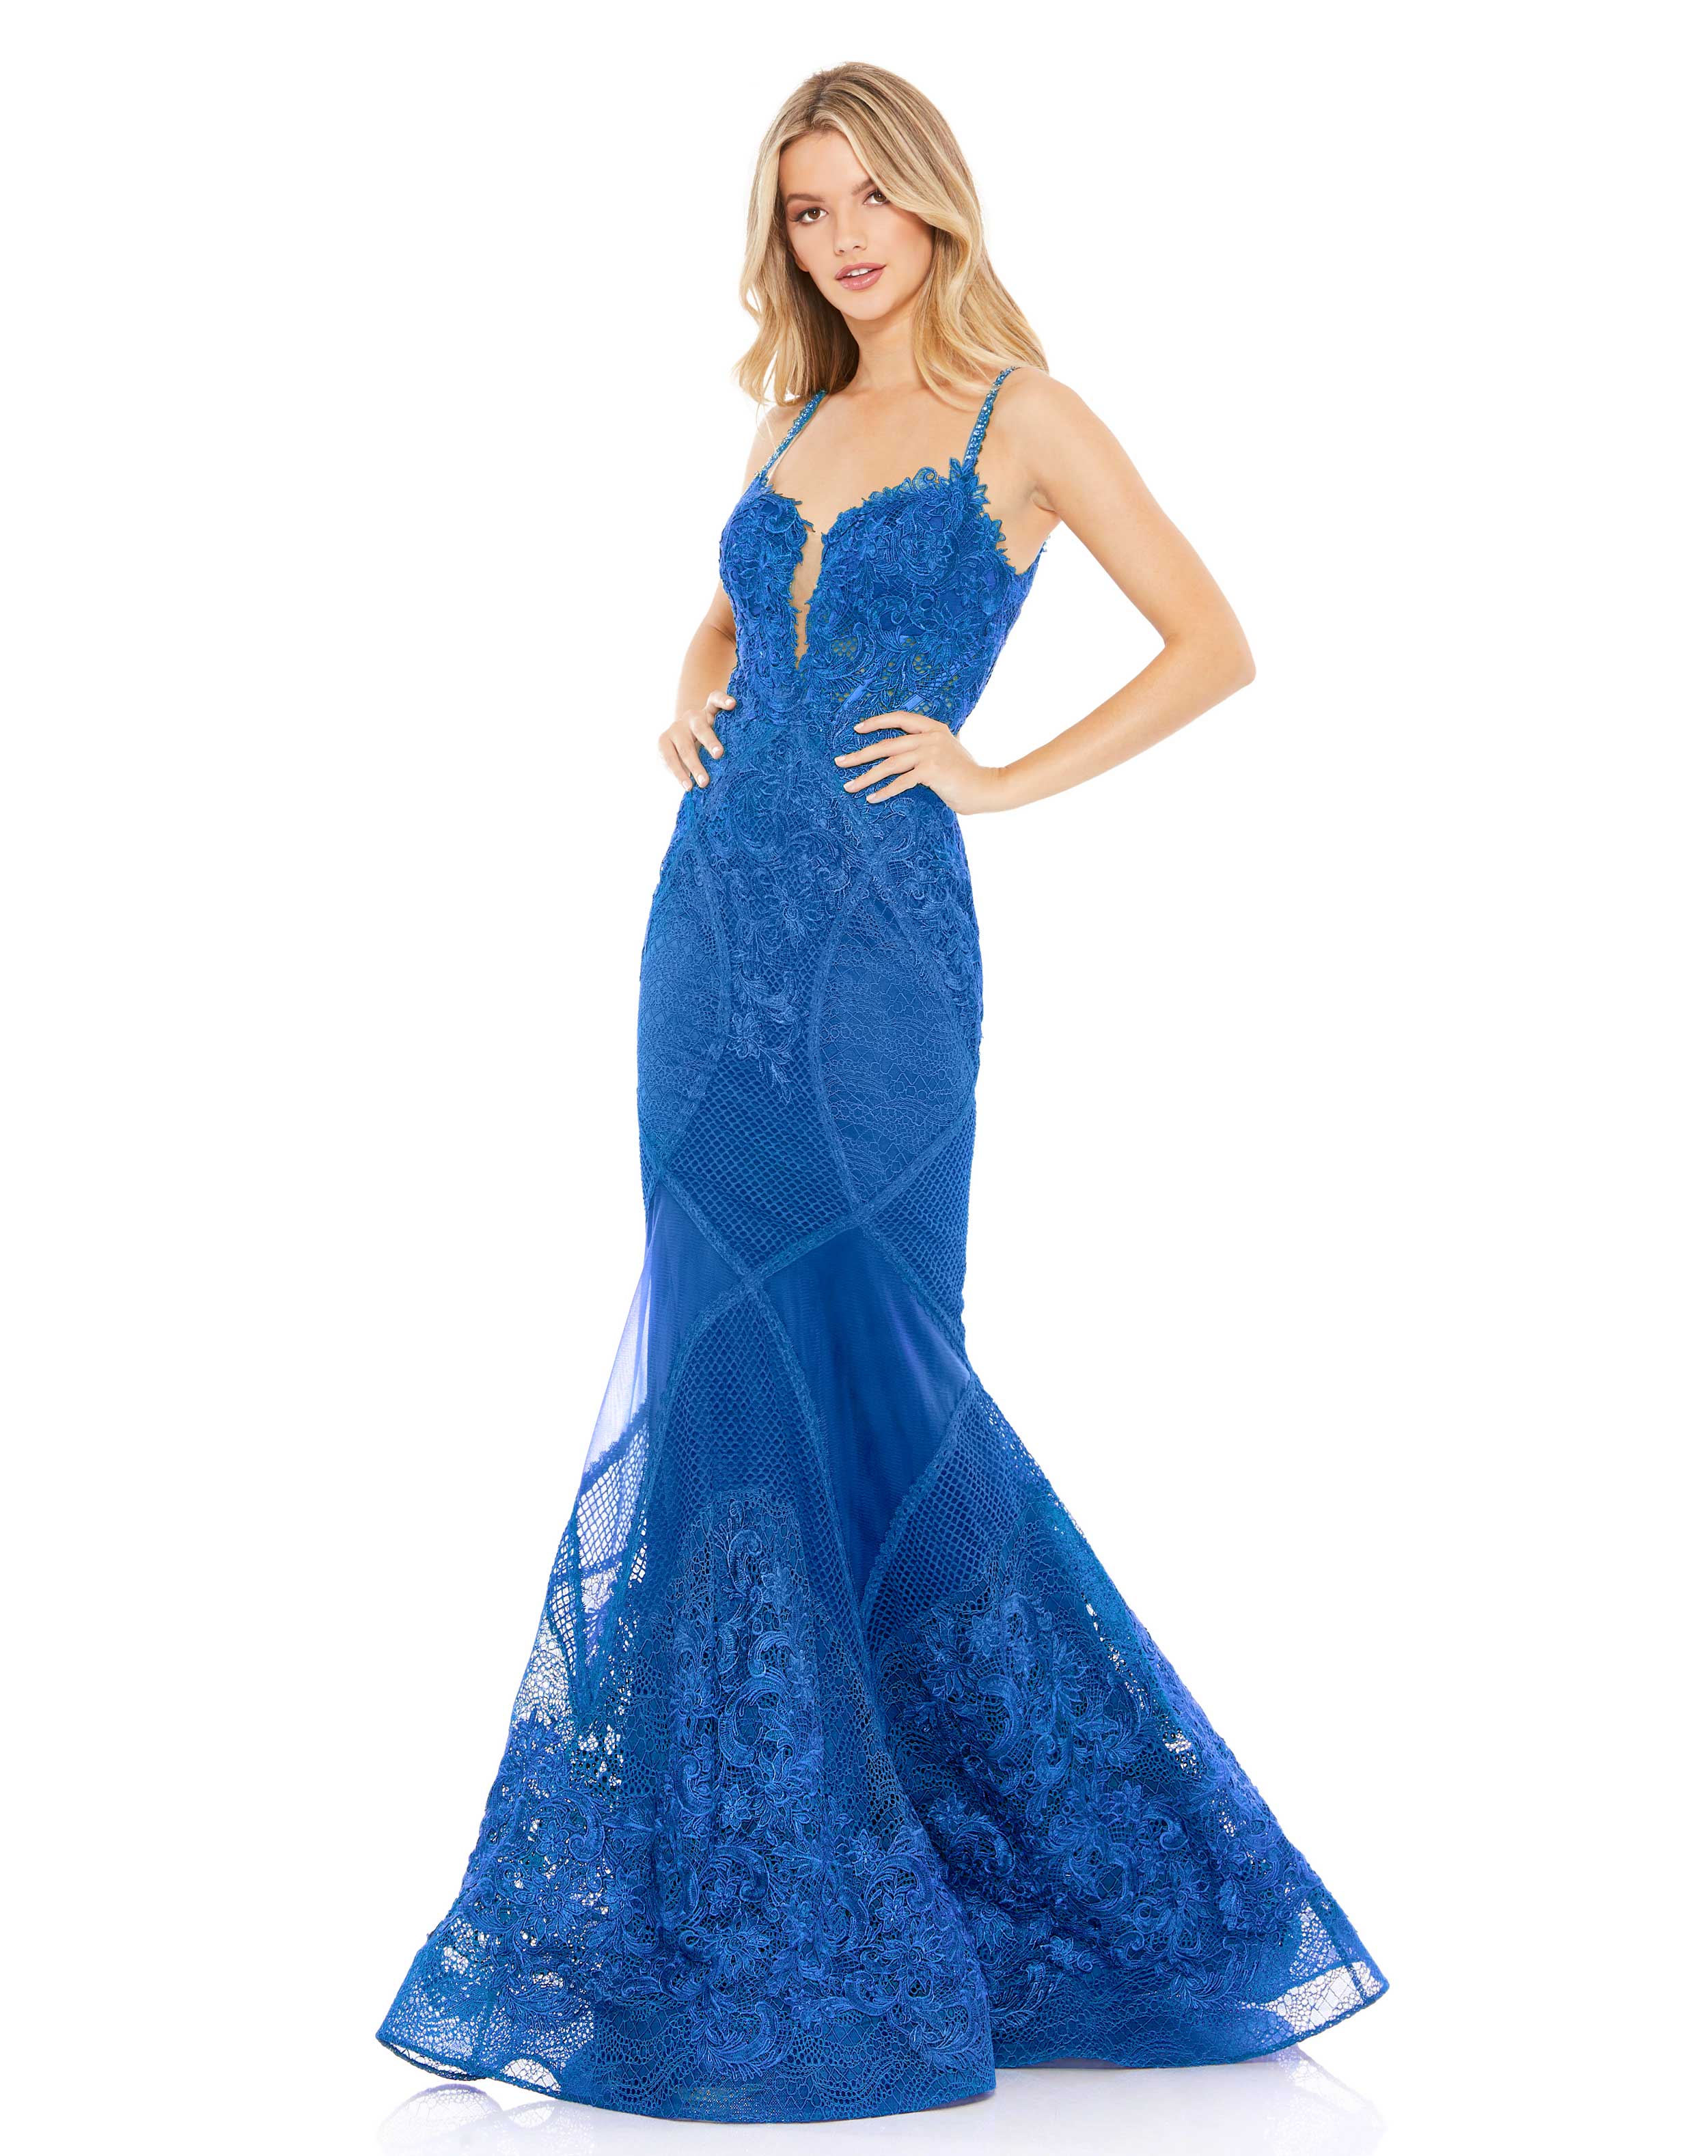 Lace Mermaid Gown - FINAL SALE